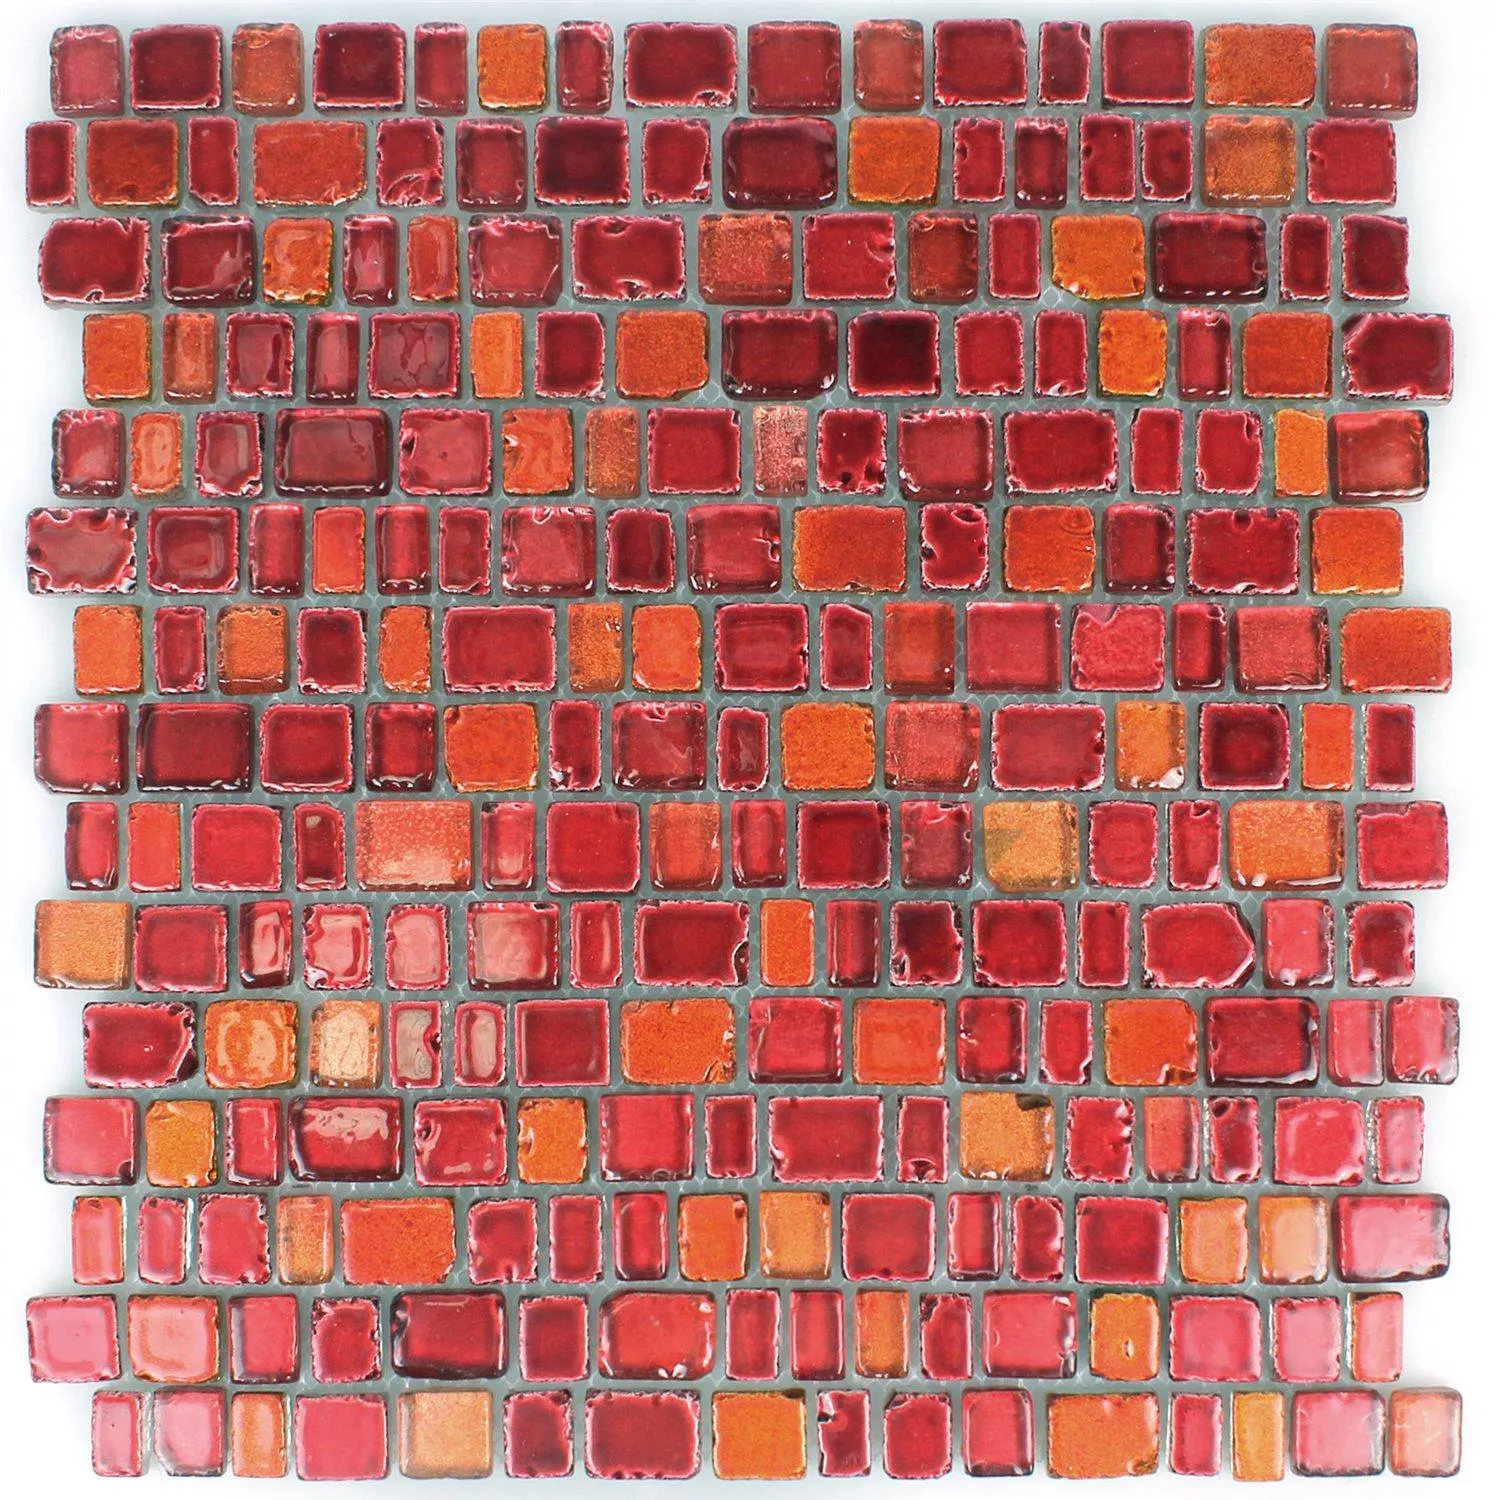 Mozaik Pločice Staklo Roxy Narančasto Crvena